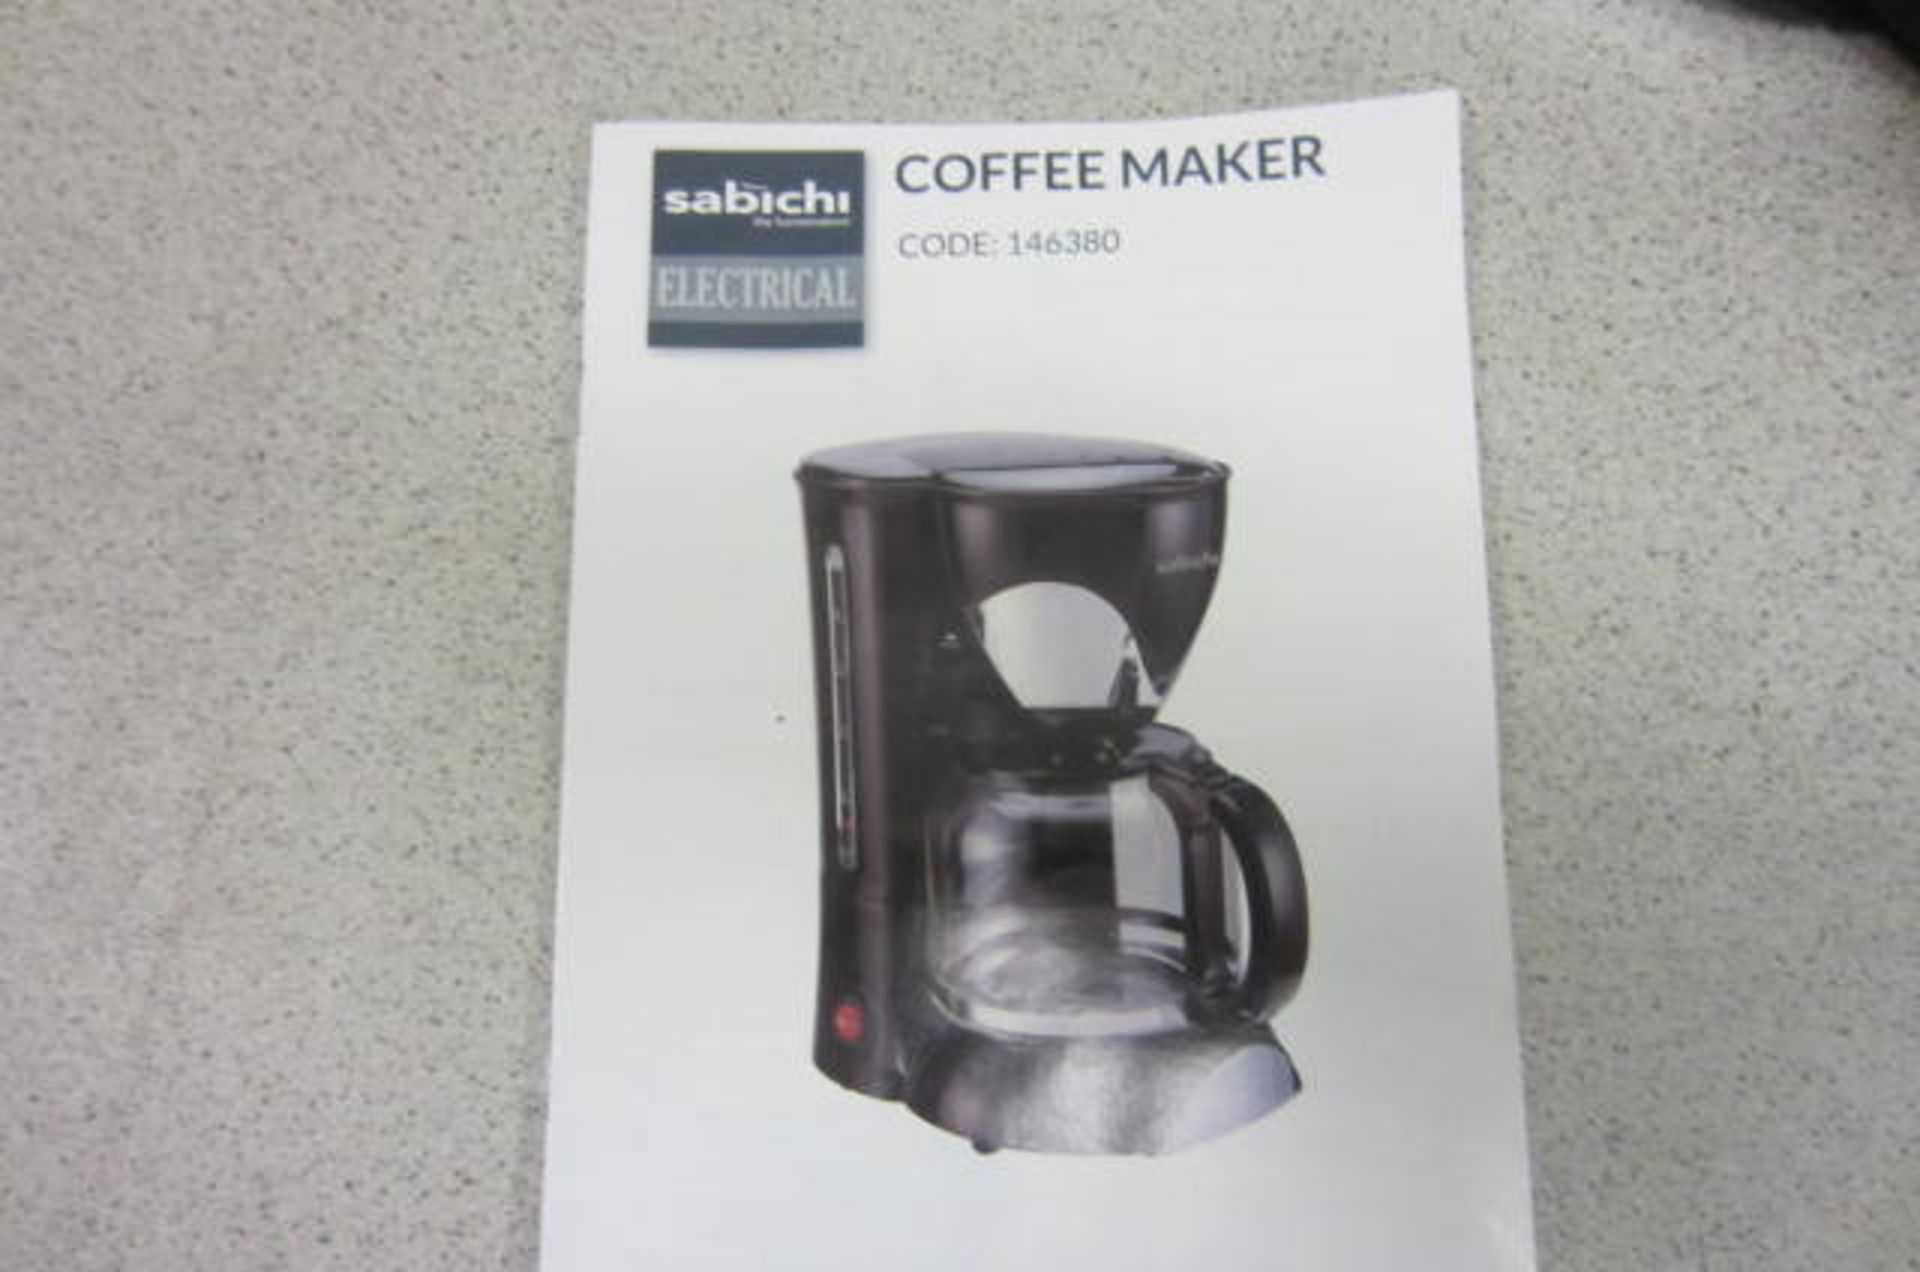 New/Unused Sabichi Coffee Maker - Image 2 of 2